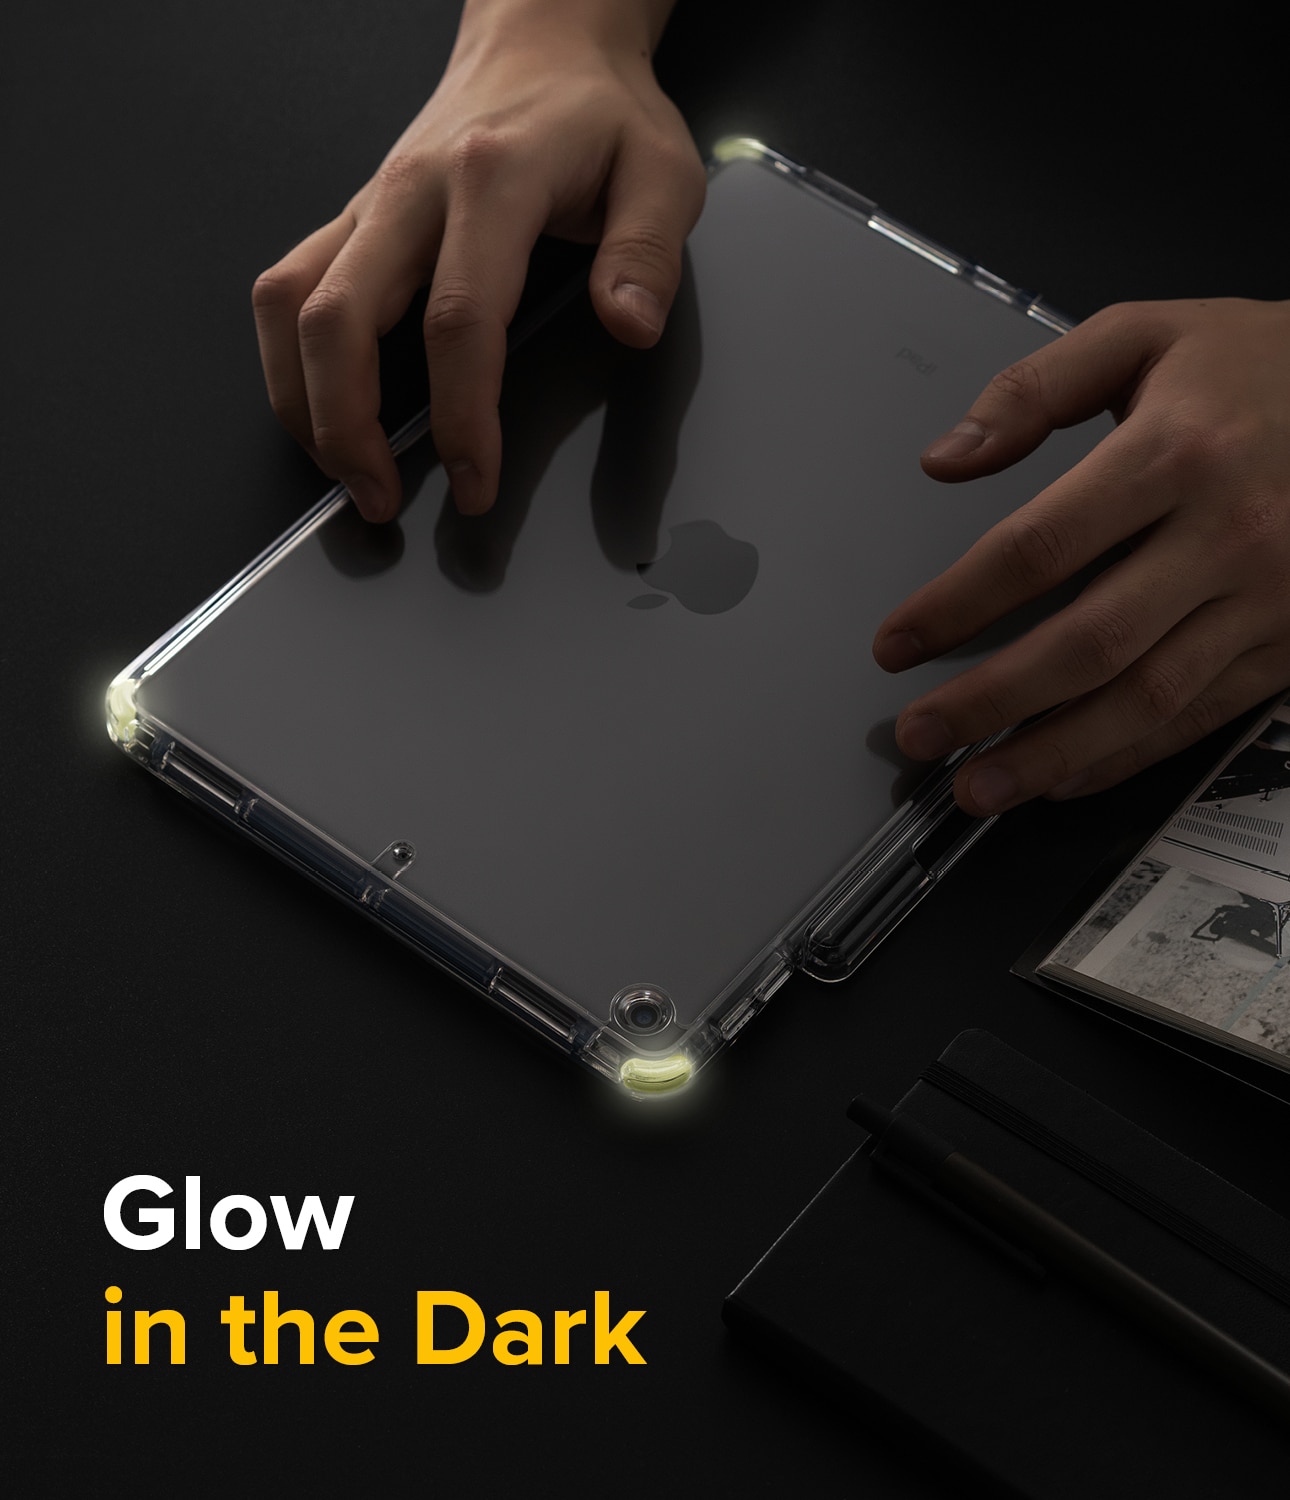 Fusion Plus Case iPad 10.2 9th Gen (2021) White/Lime Glow